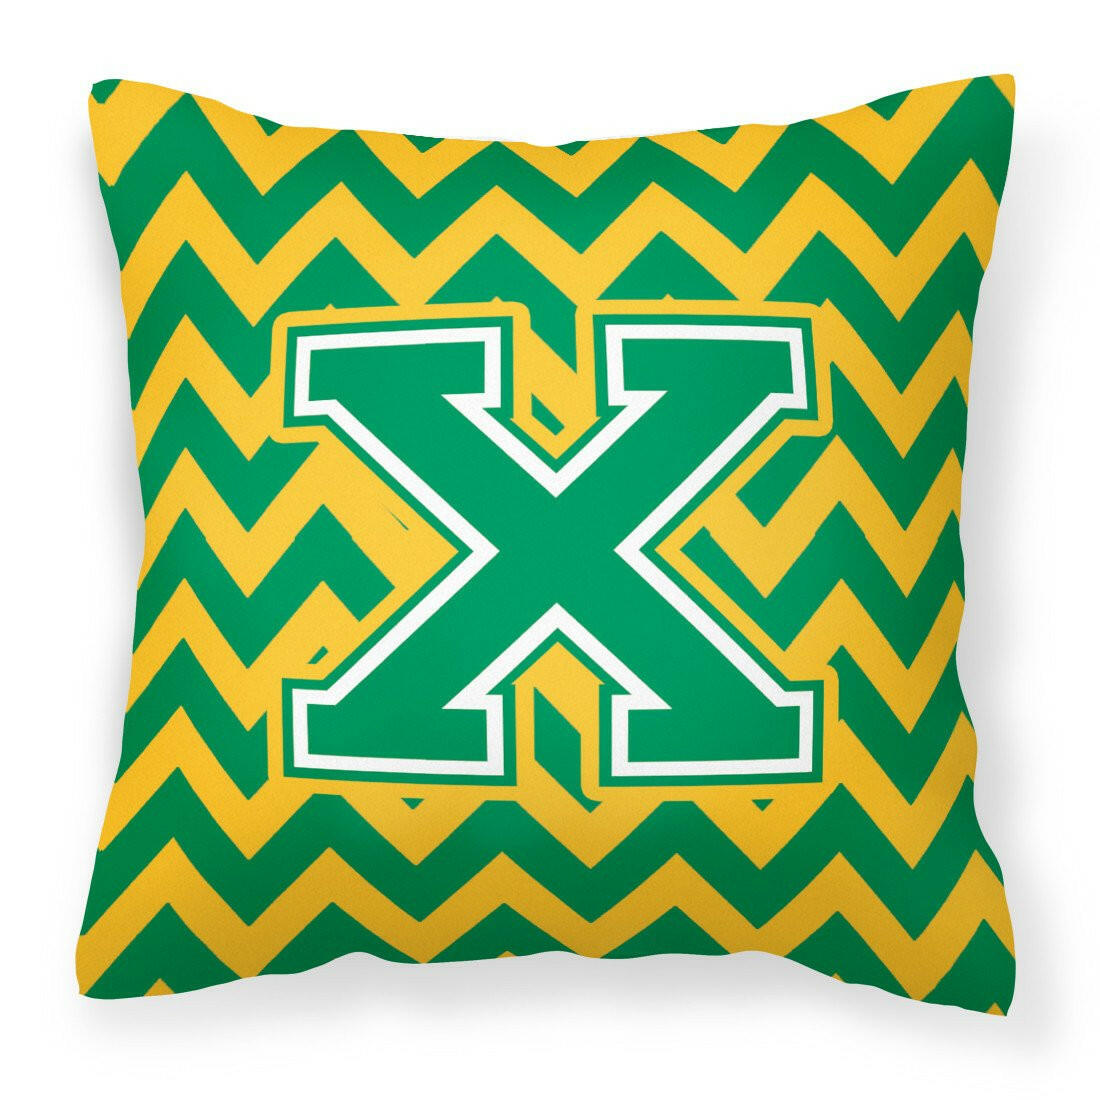 Letter X Chevron Green and Gold Fabric Decorative Pillow CJ1059-XPW1414 by Caroline's Treasures